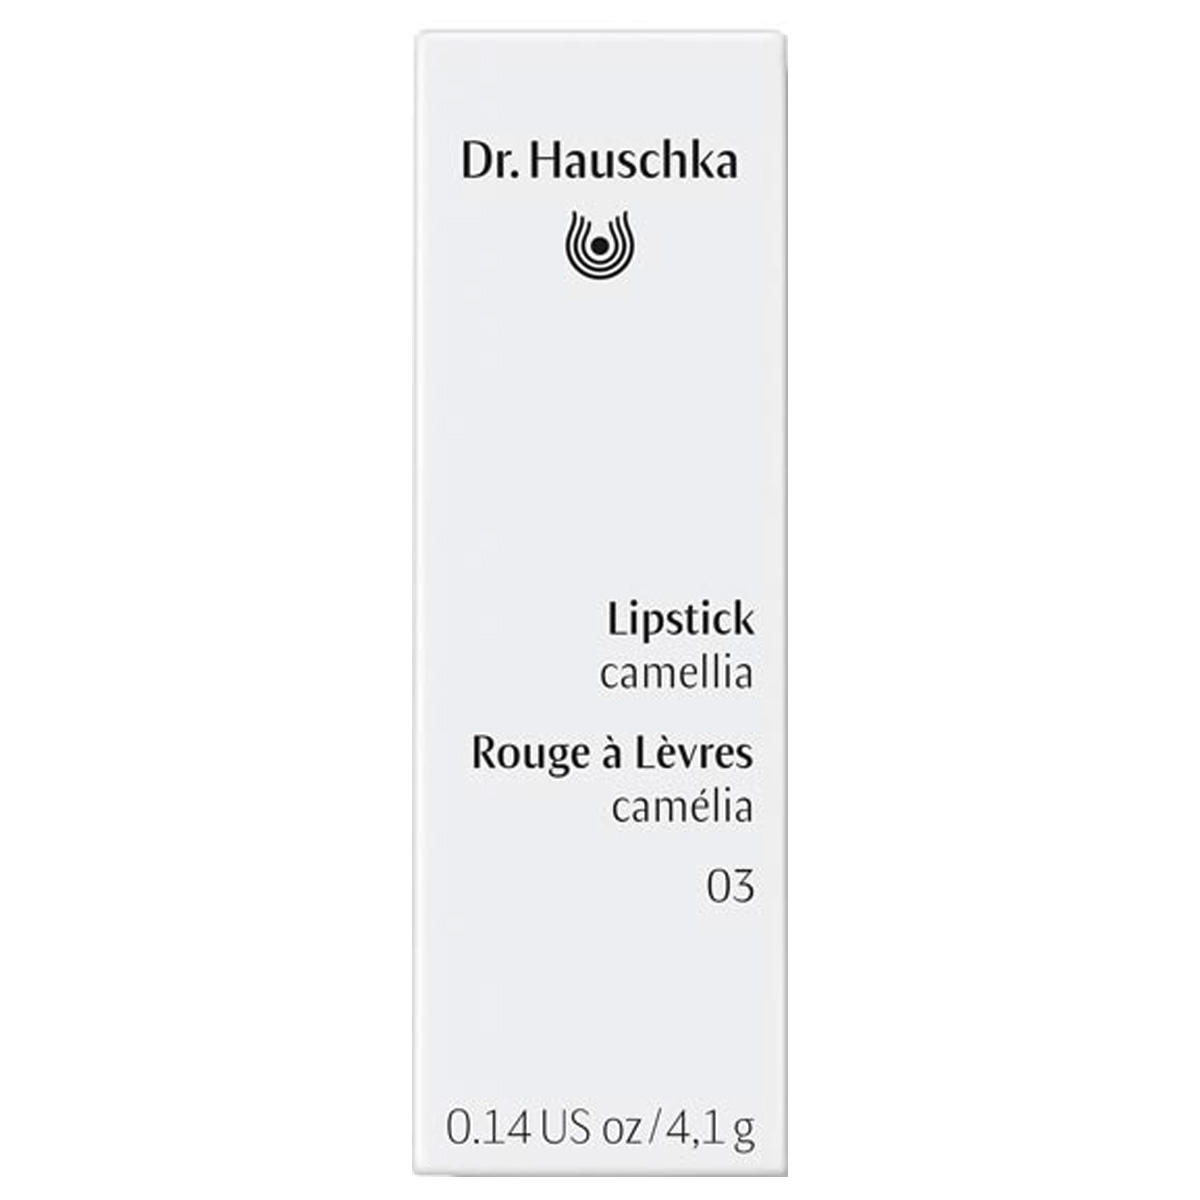 Dr. Hauschka Lipstick 03 camellia, Inhalt 4,1 g - 2